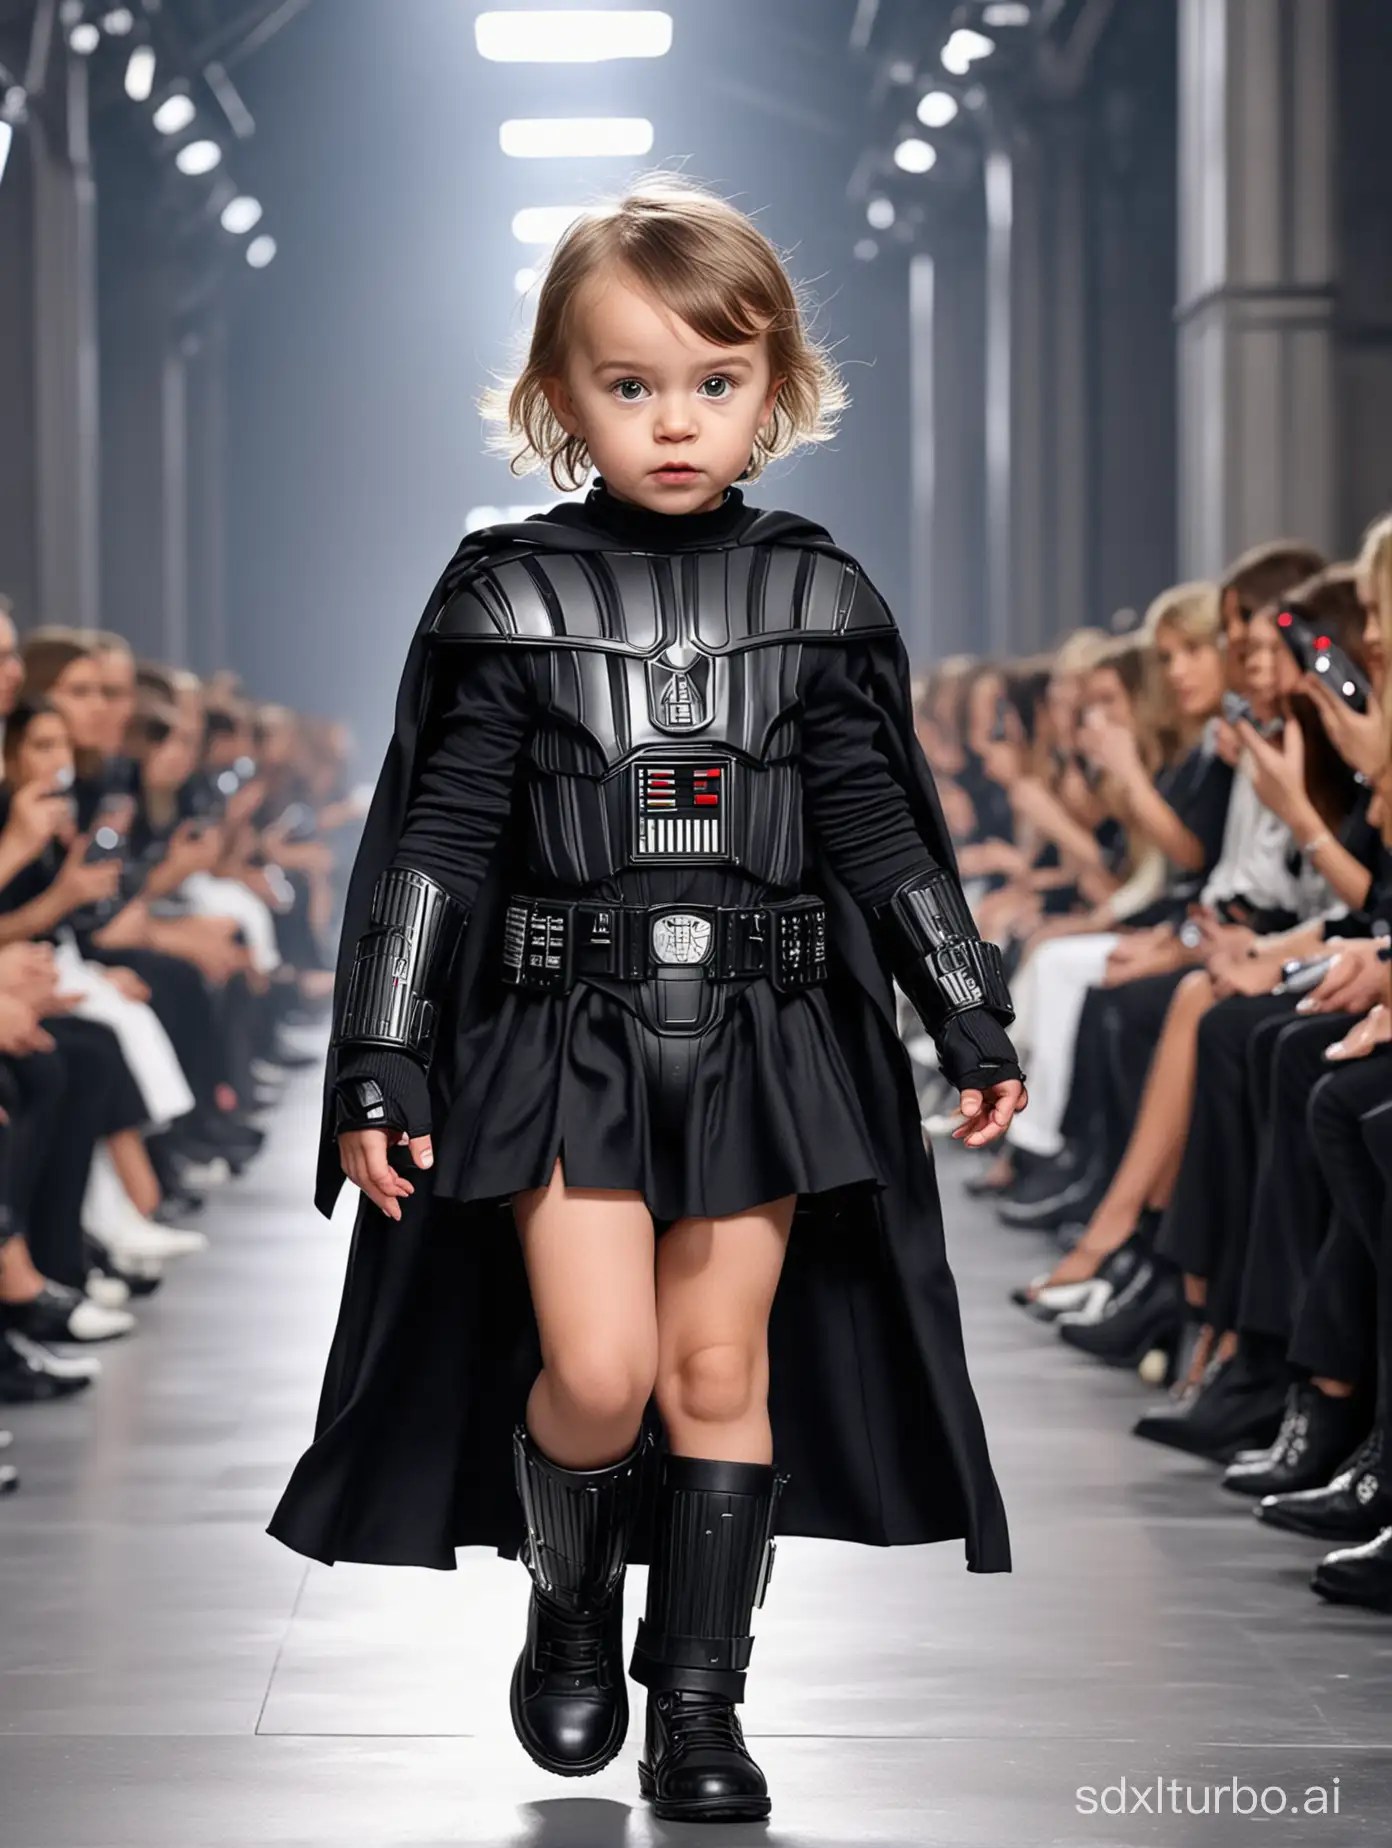 Eccentric-Baby-Model-Struts-Runway-in-Darth-Vader-Attire-at-Paris-Collection